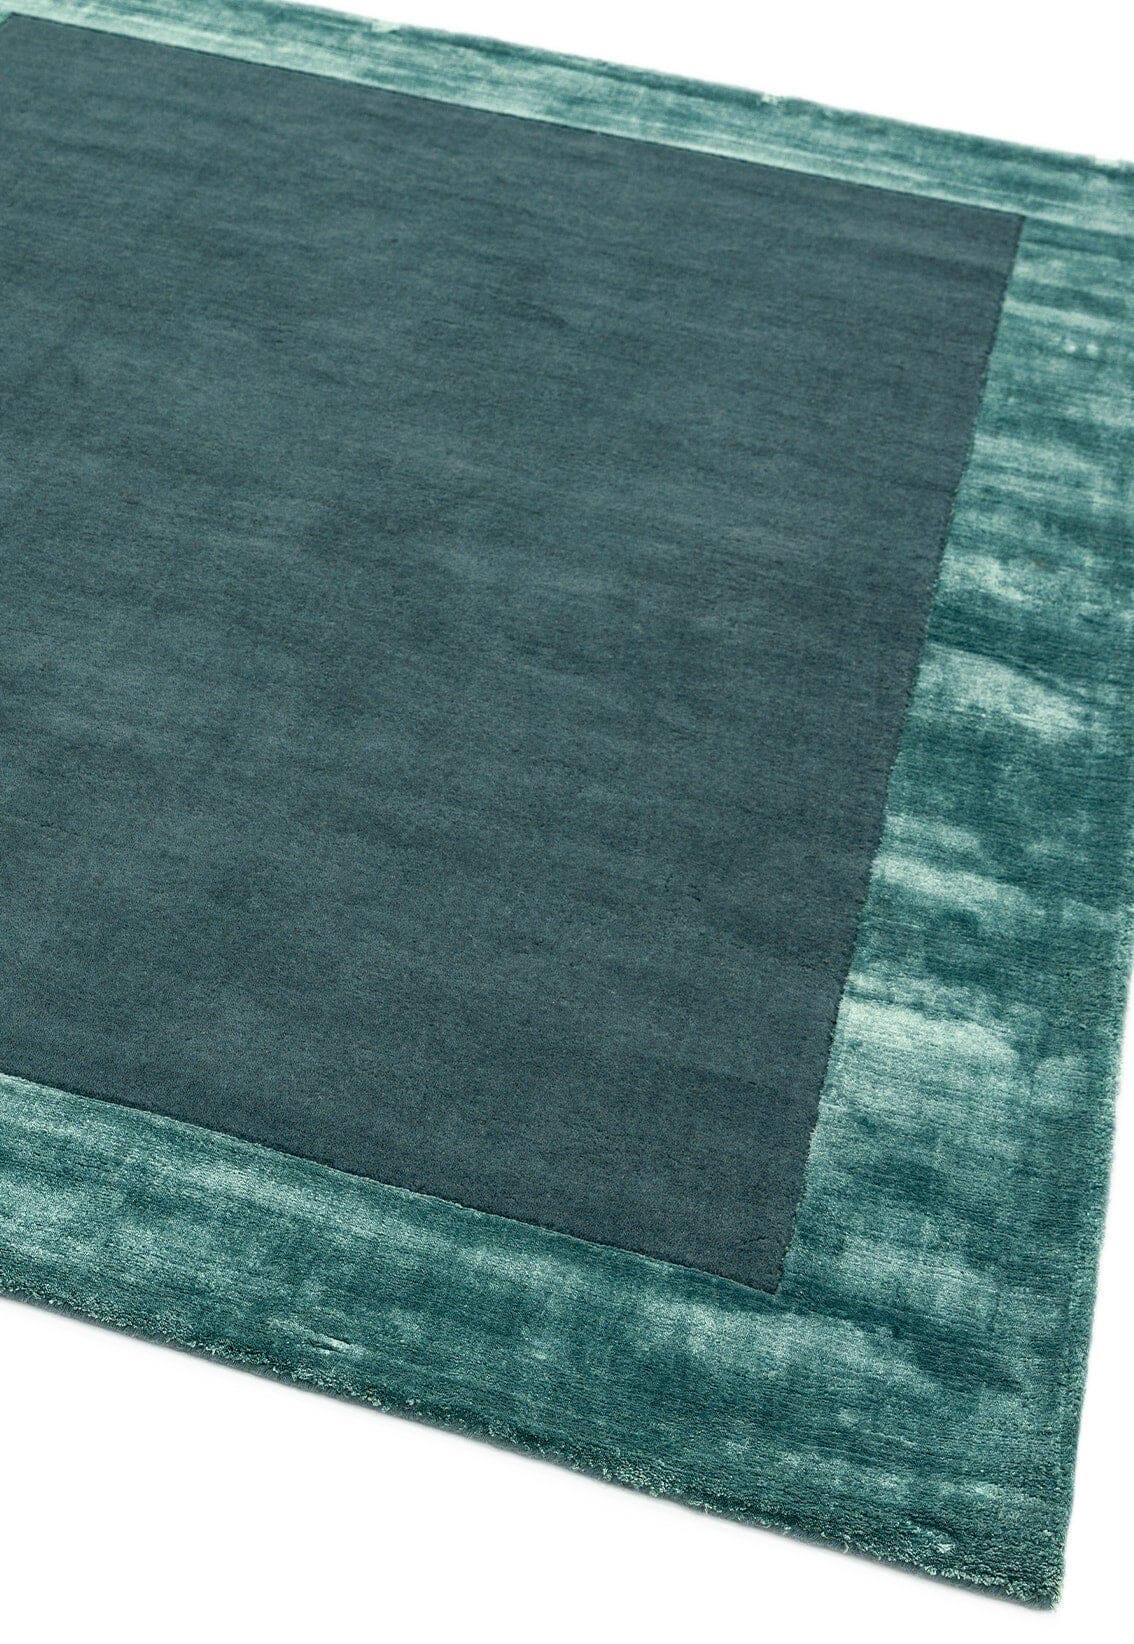  Asiatic Carpets-Asiatic Carpets Ascot Hand Woven Rug Aqua Blue - 160 x 230cm-Blue 973 